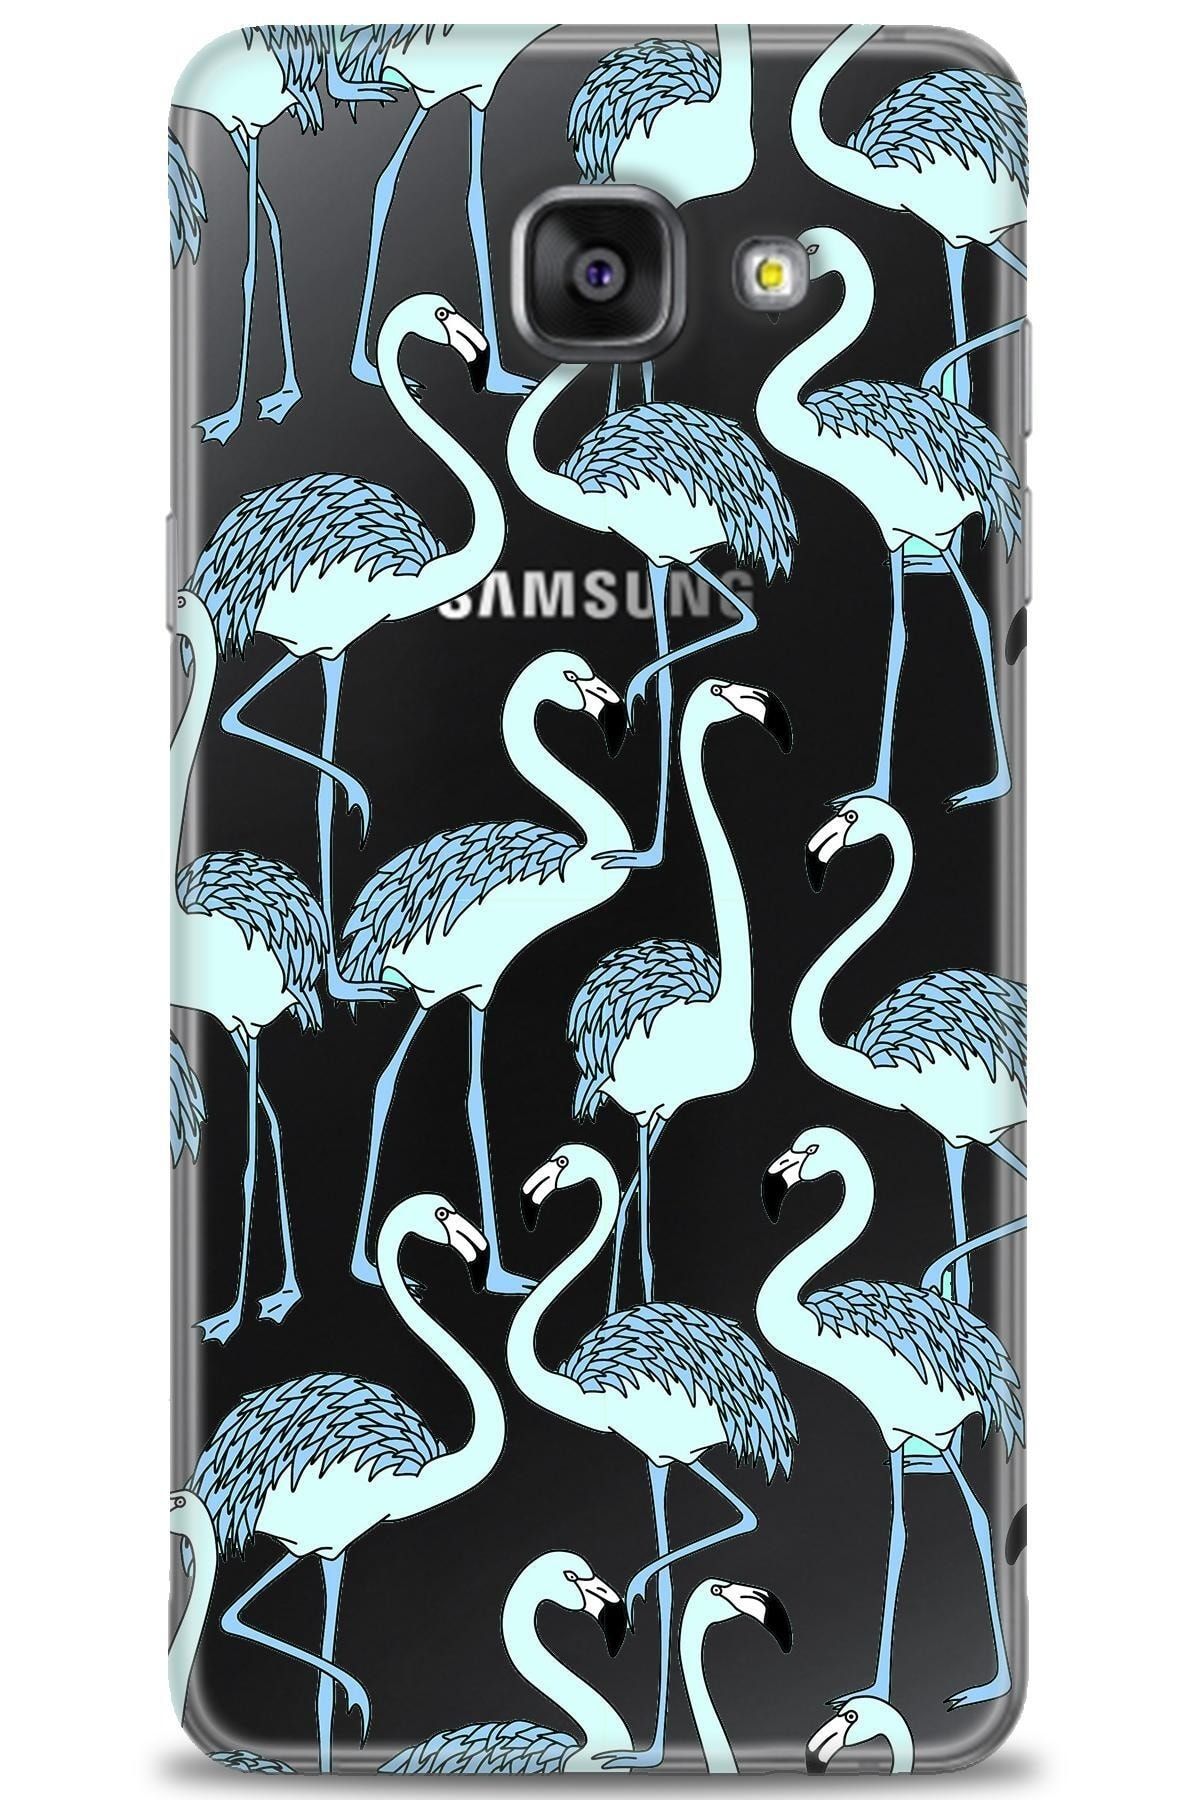 adveksiyon Samsung Galaxy A5 2016 / A510 Kılıf Hd Baskılı Kılıf - Flamingo Seri + Nano Micro Ekran Koruyucu